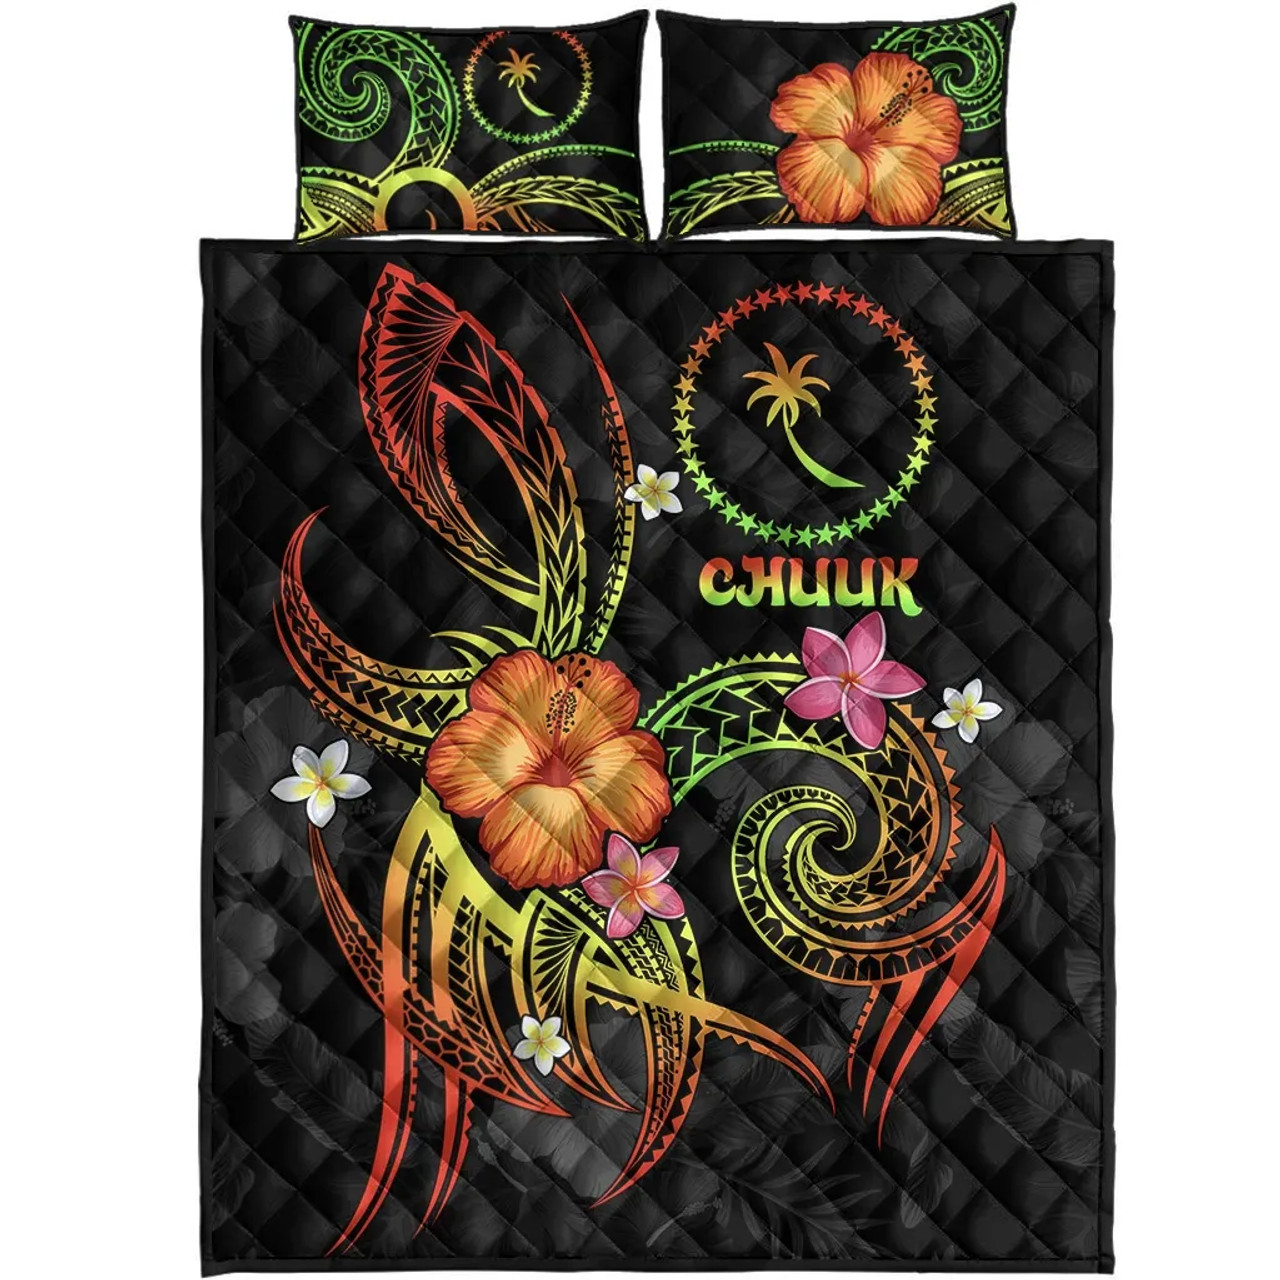 Chuuk Polynesian Quilt Bed Set - Legend of Chuuk (Reggae) 2